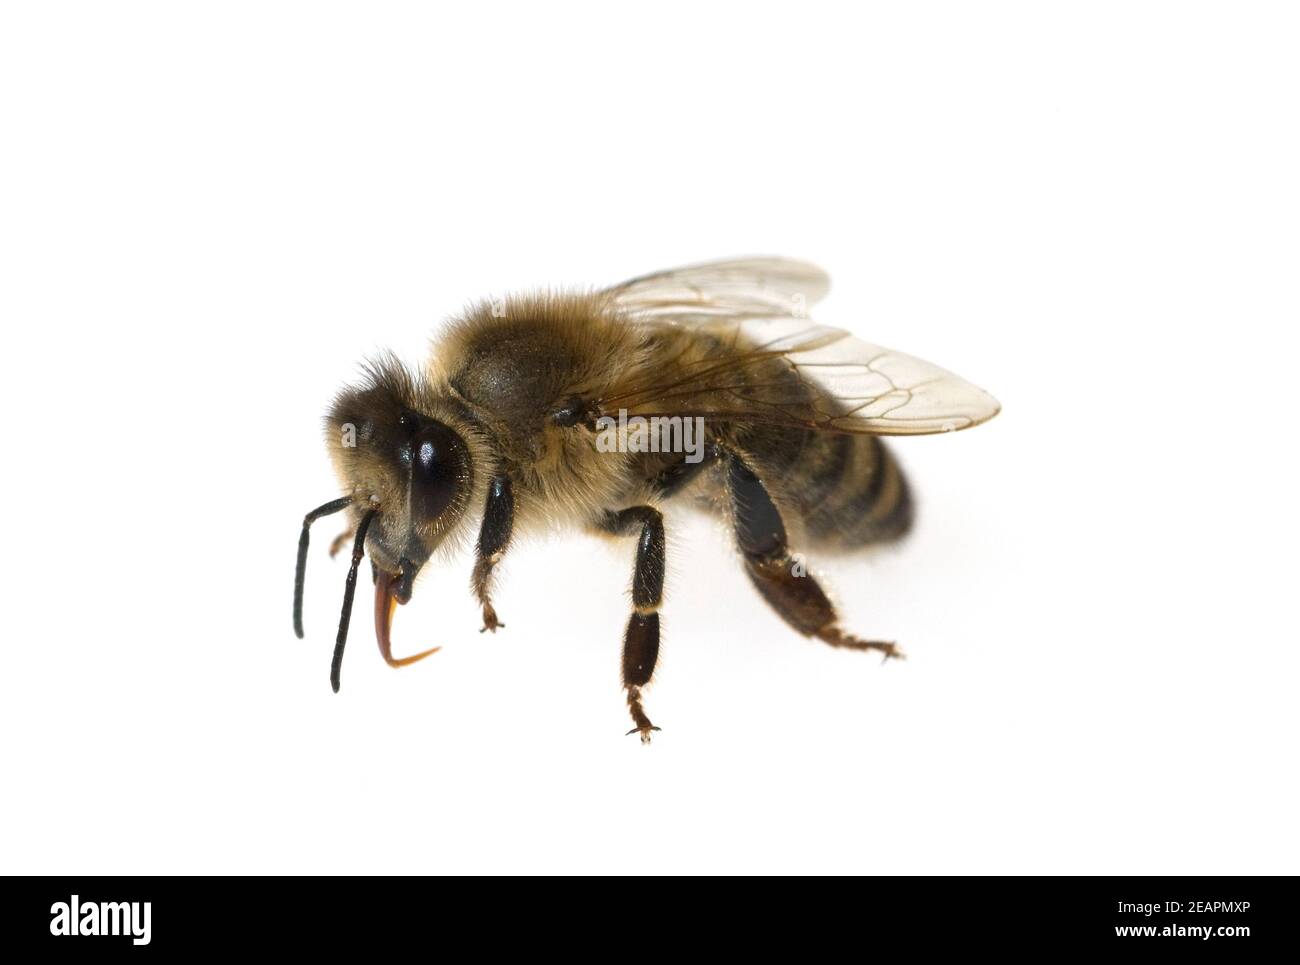 Biene, Apis mellifera Honigbiene Insekt Foto de stock